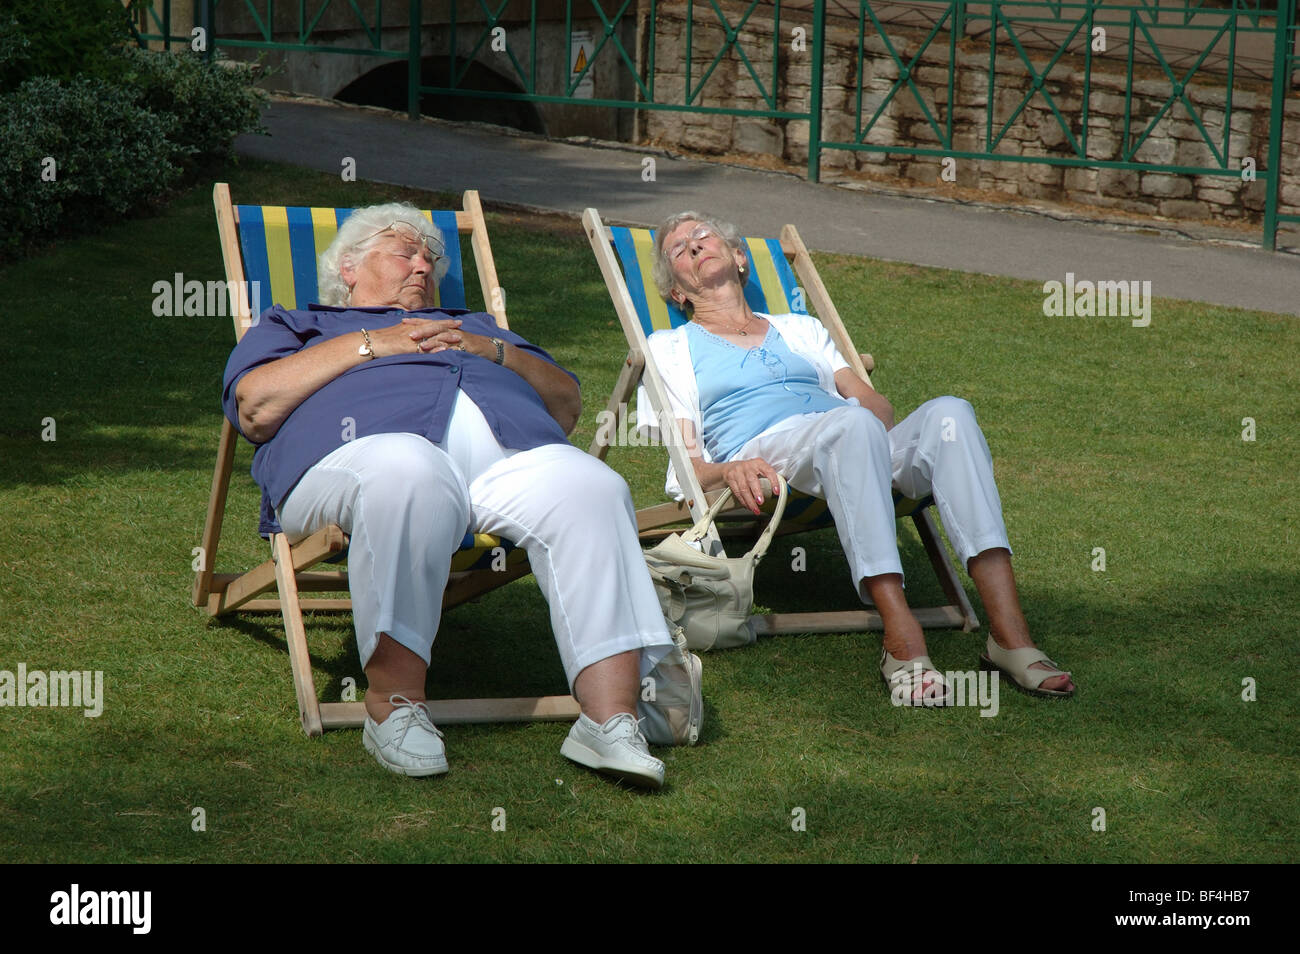 two elderly ladies sunbathing in deckchairs, Lower Gardens, Bournemouth, Dorset, England, UK Stock Photo